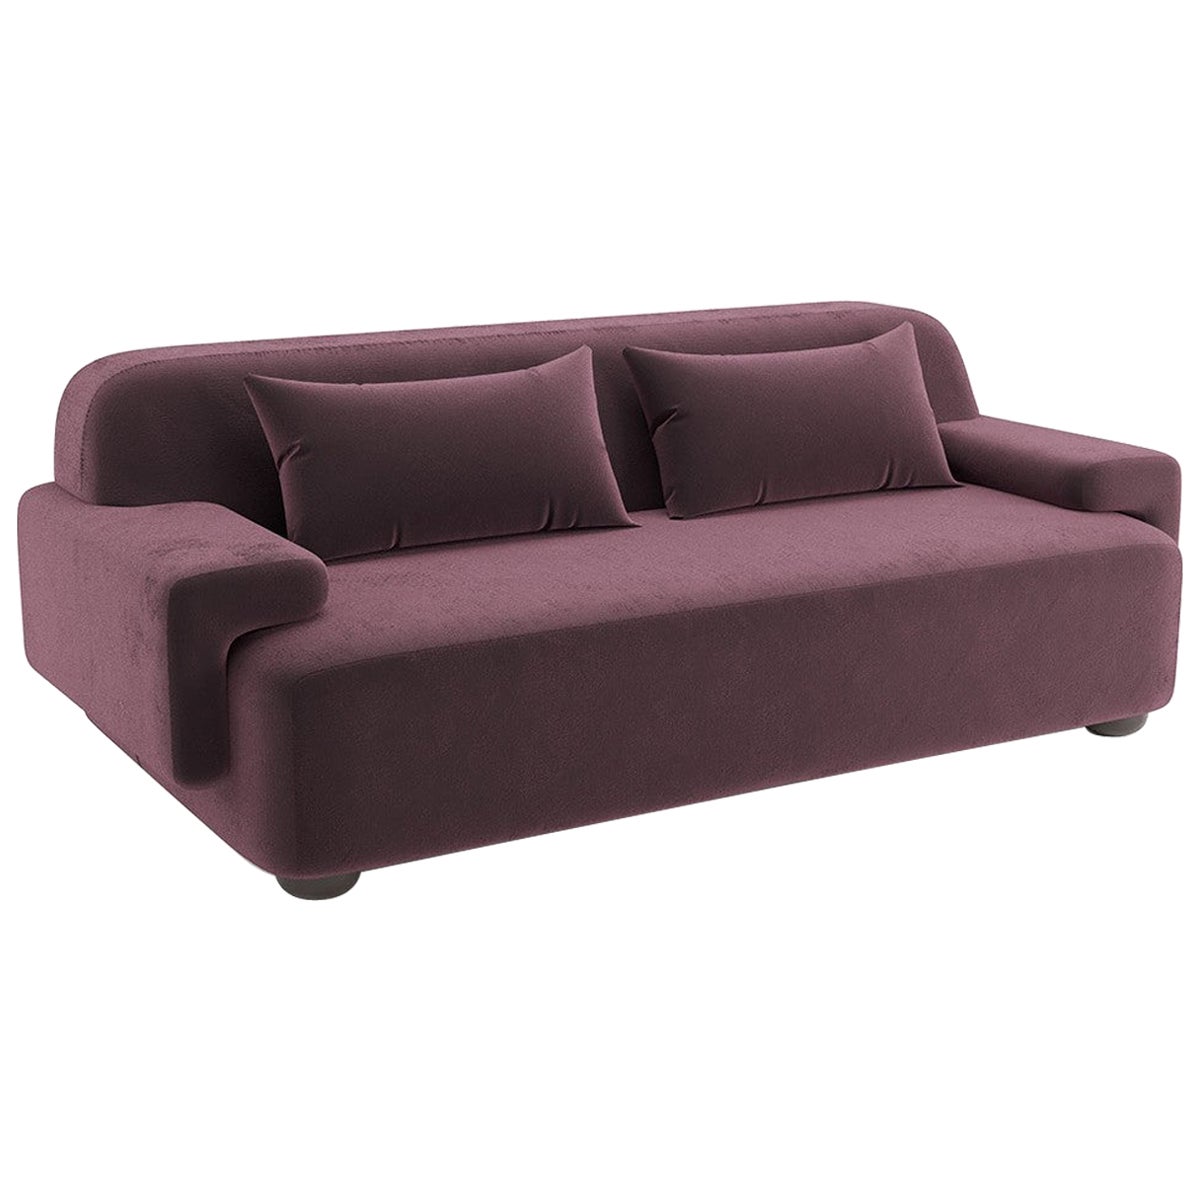 Popus Editions Lena 4 Seater Sofa in Bordeaux Como Velvet Upholstery